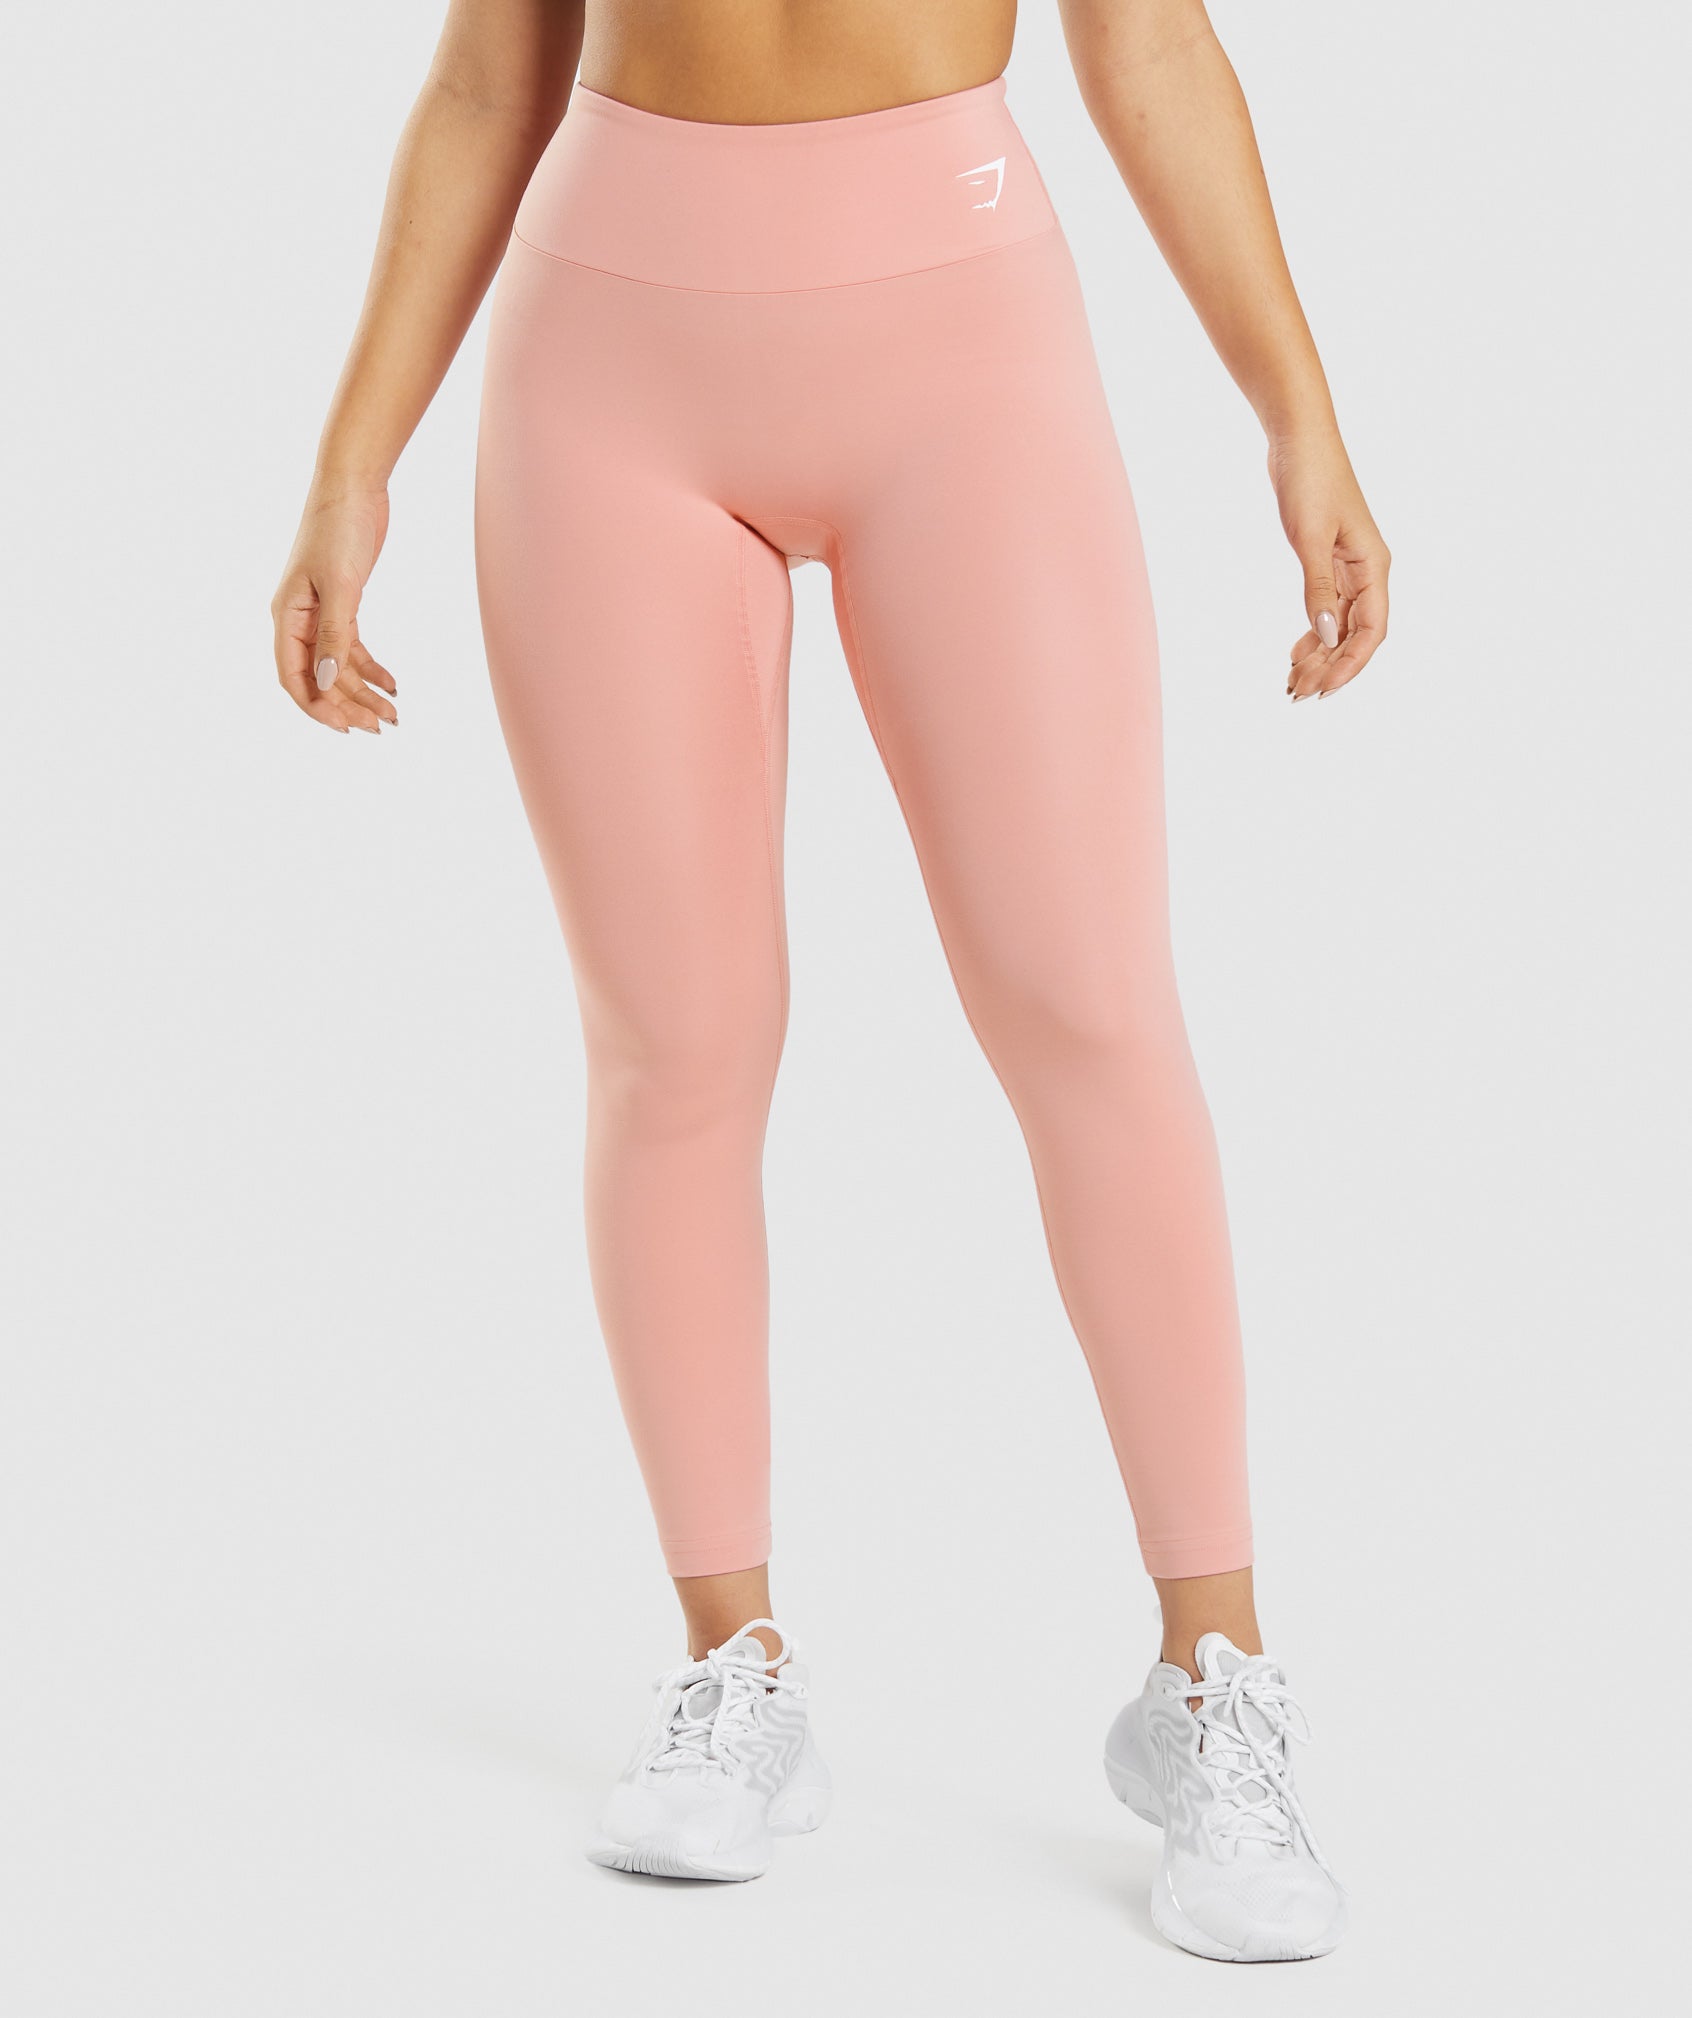 Pink Compression Leggings, Yoga Pants – Edgefitness_apparel